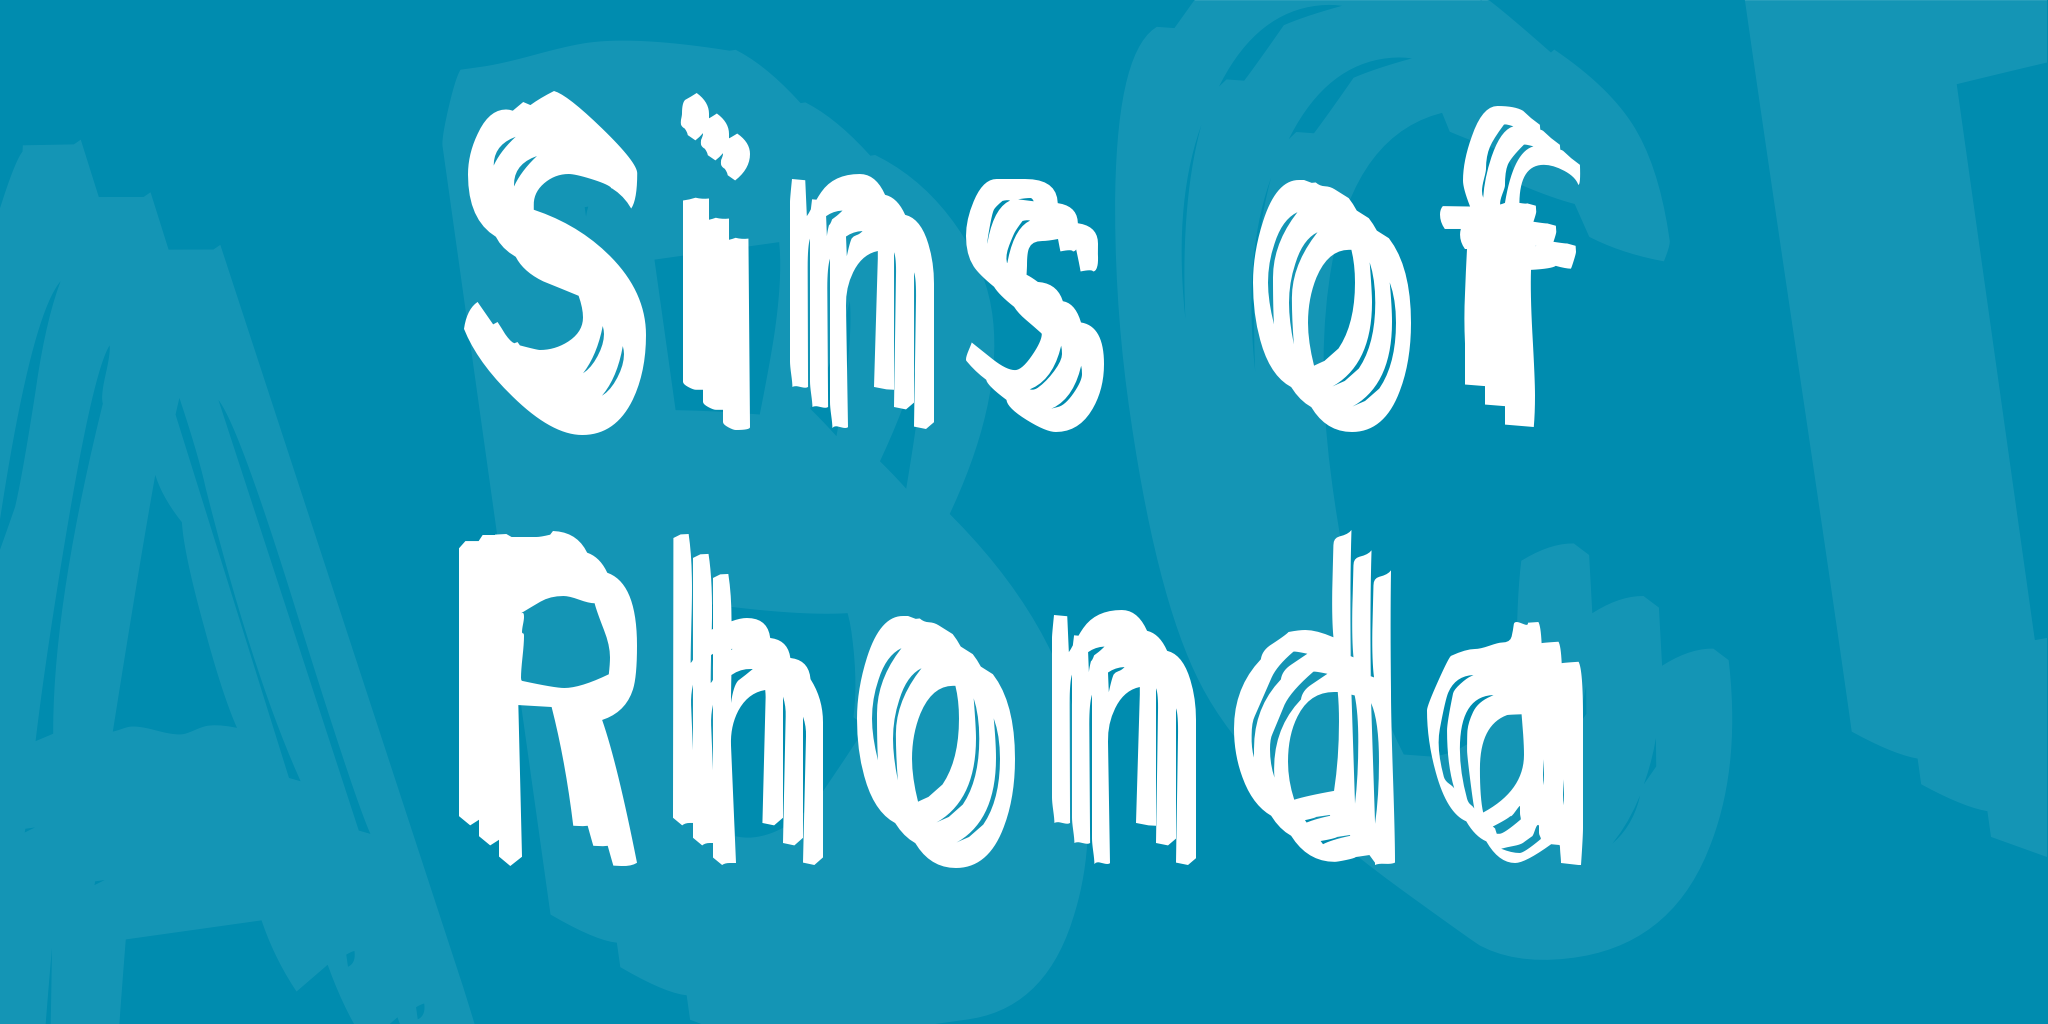 Sins Of Rhonda